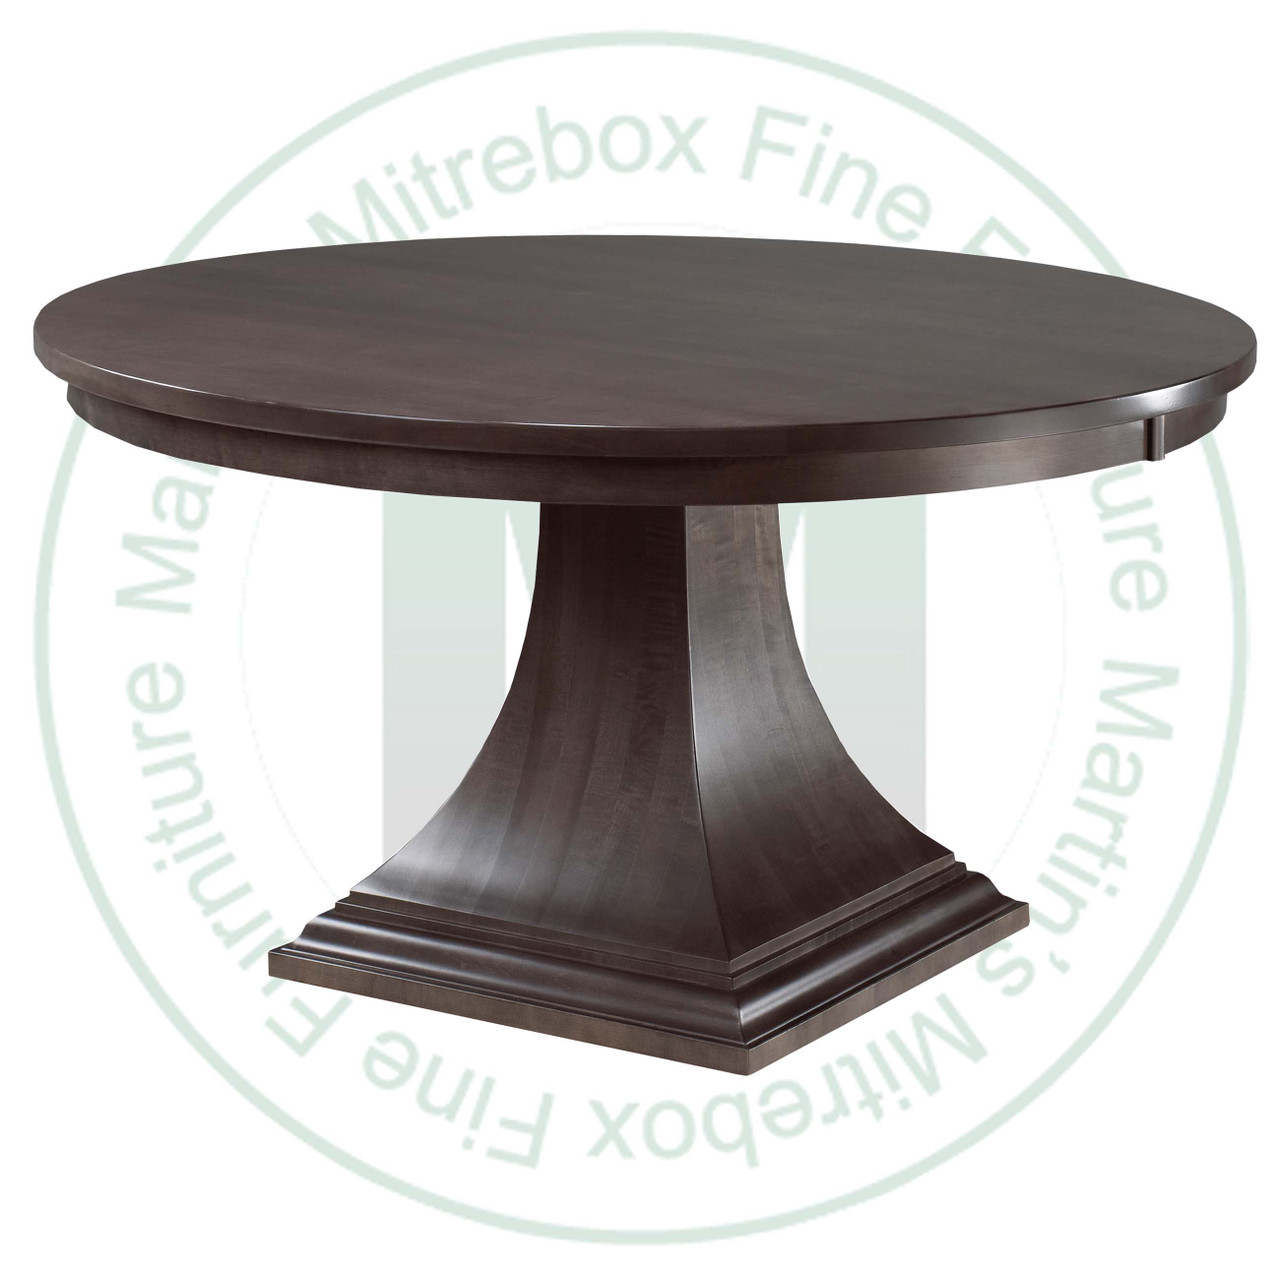 Oak Key West Single Pedestal Table 60''D x 60''W x 30''H With 2 - 12'' Leaves Table